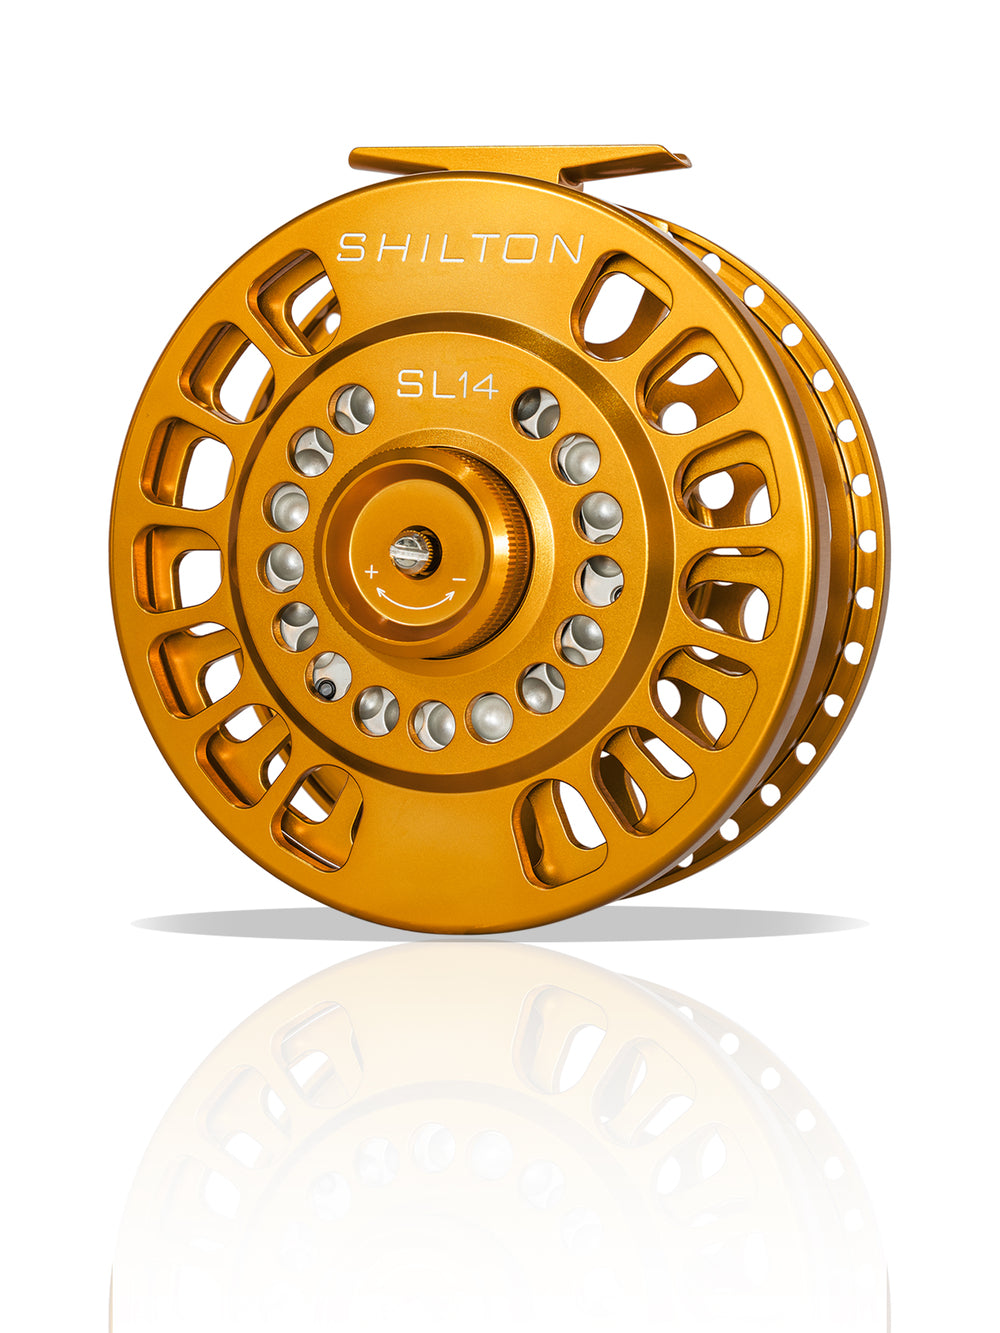 Shilton SL8 Reel (14-16wt) SL14 in Golden Orange